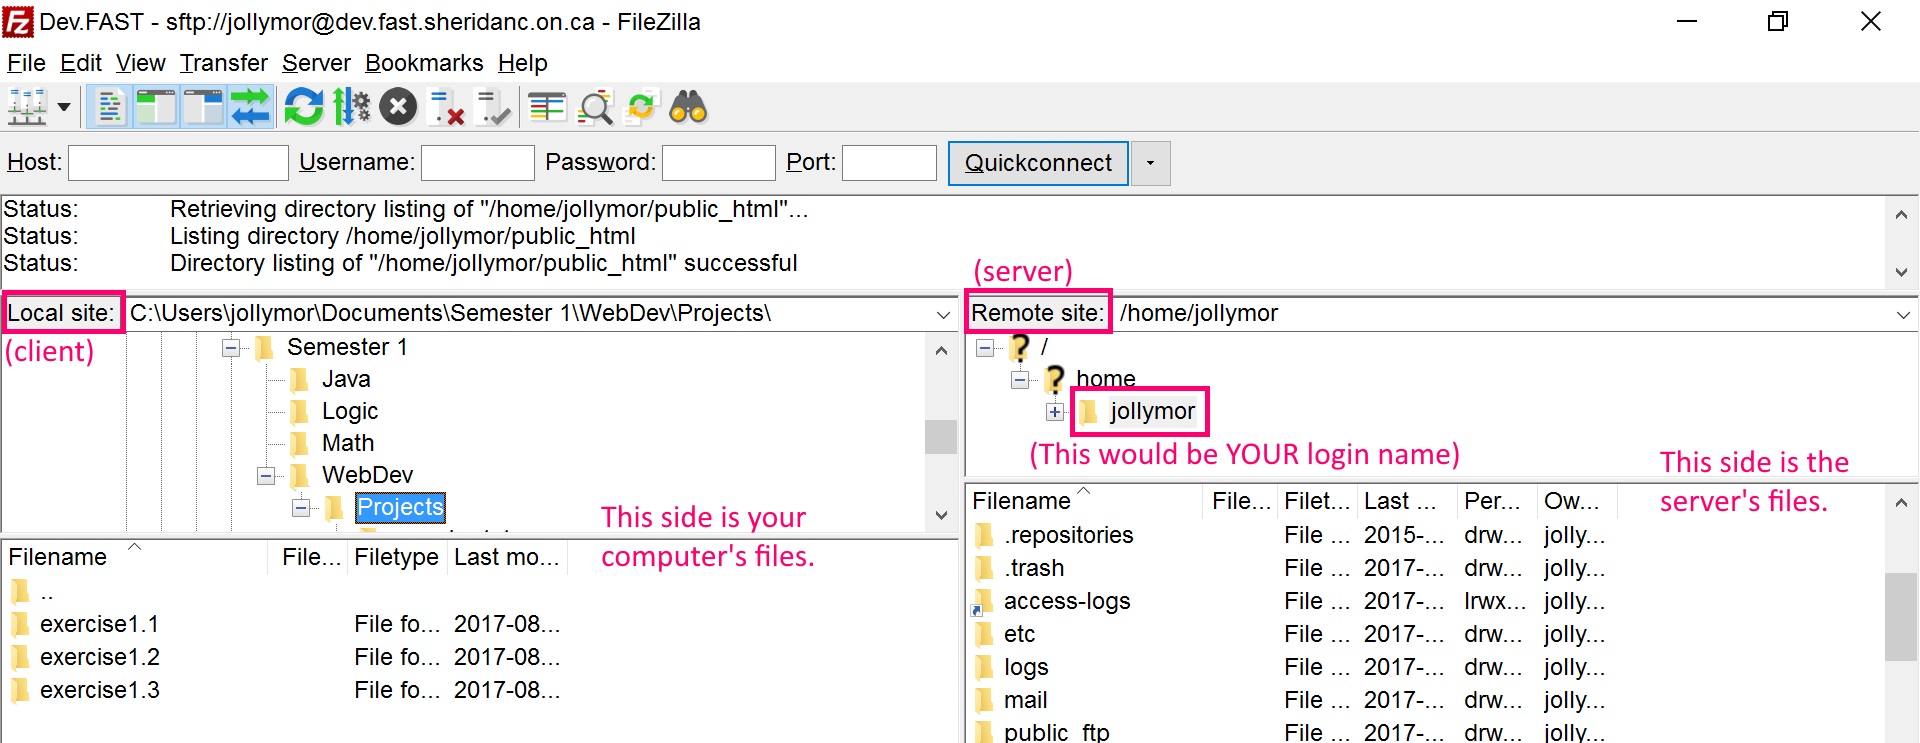 FileZilla showing the local and remote files